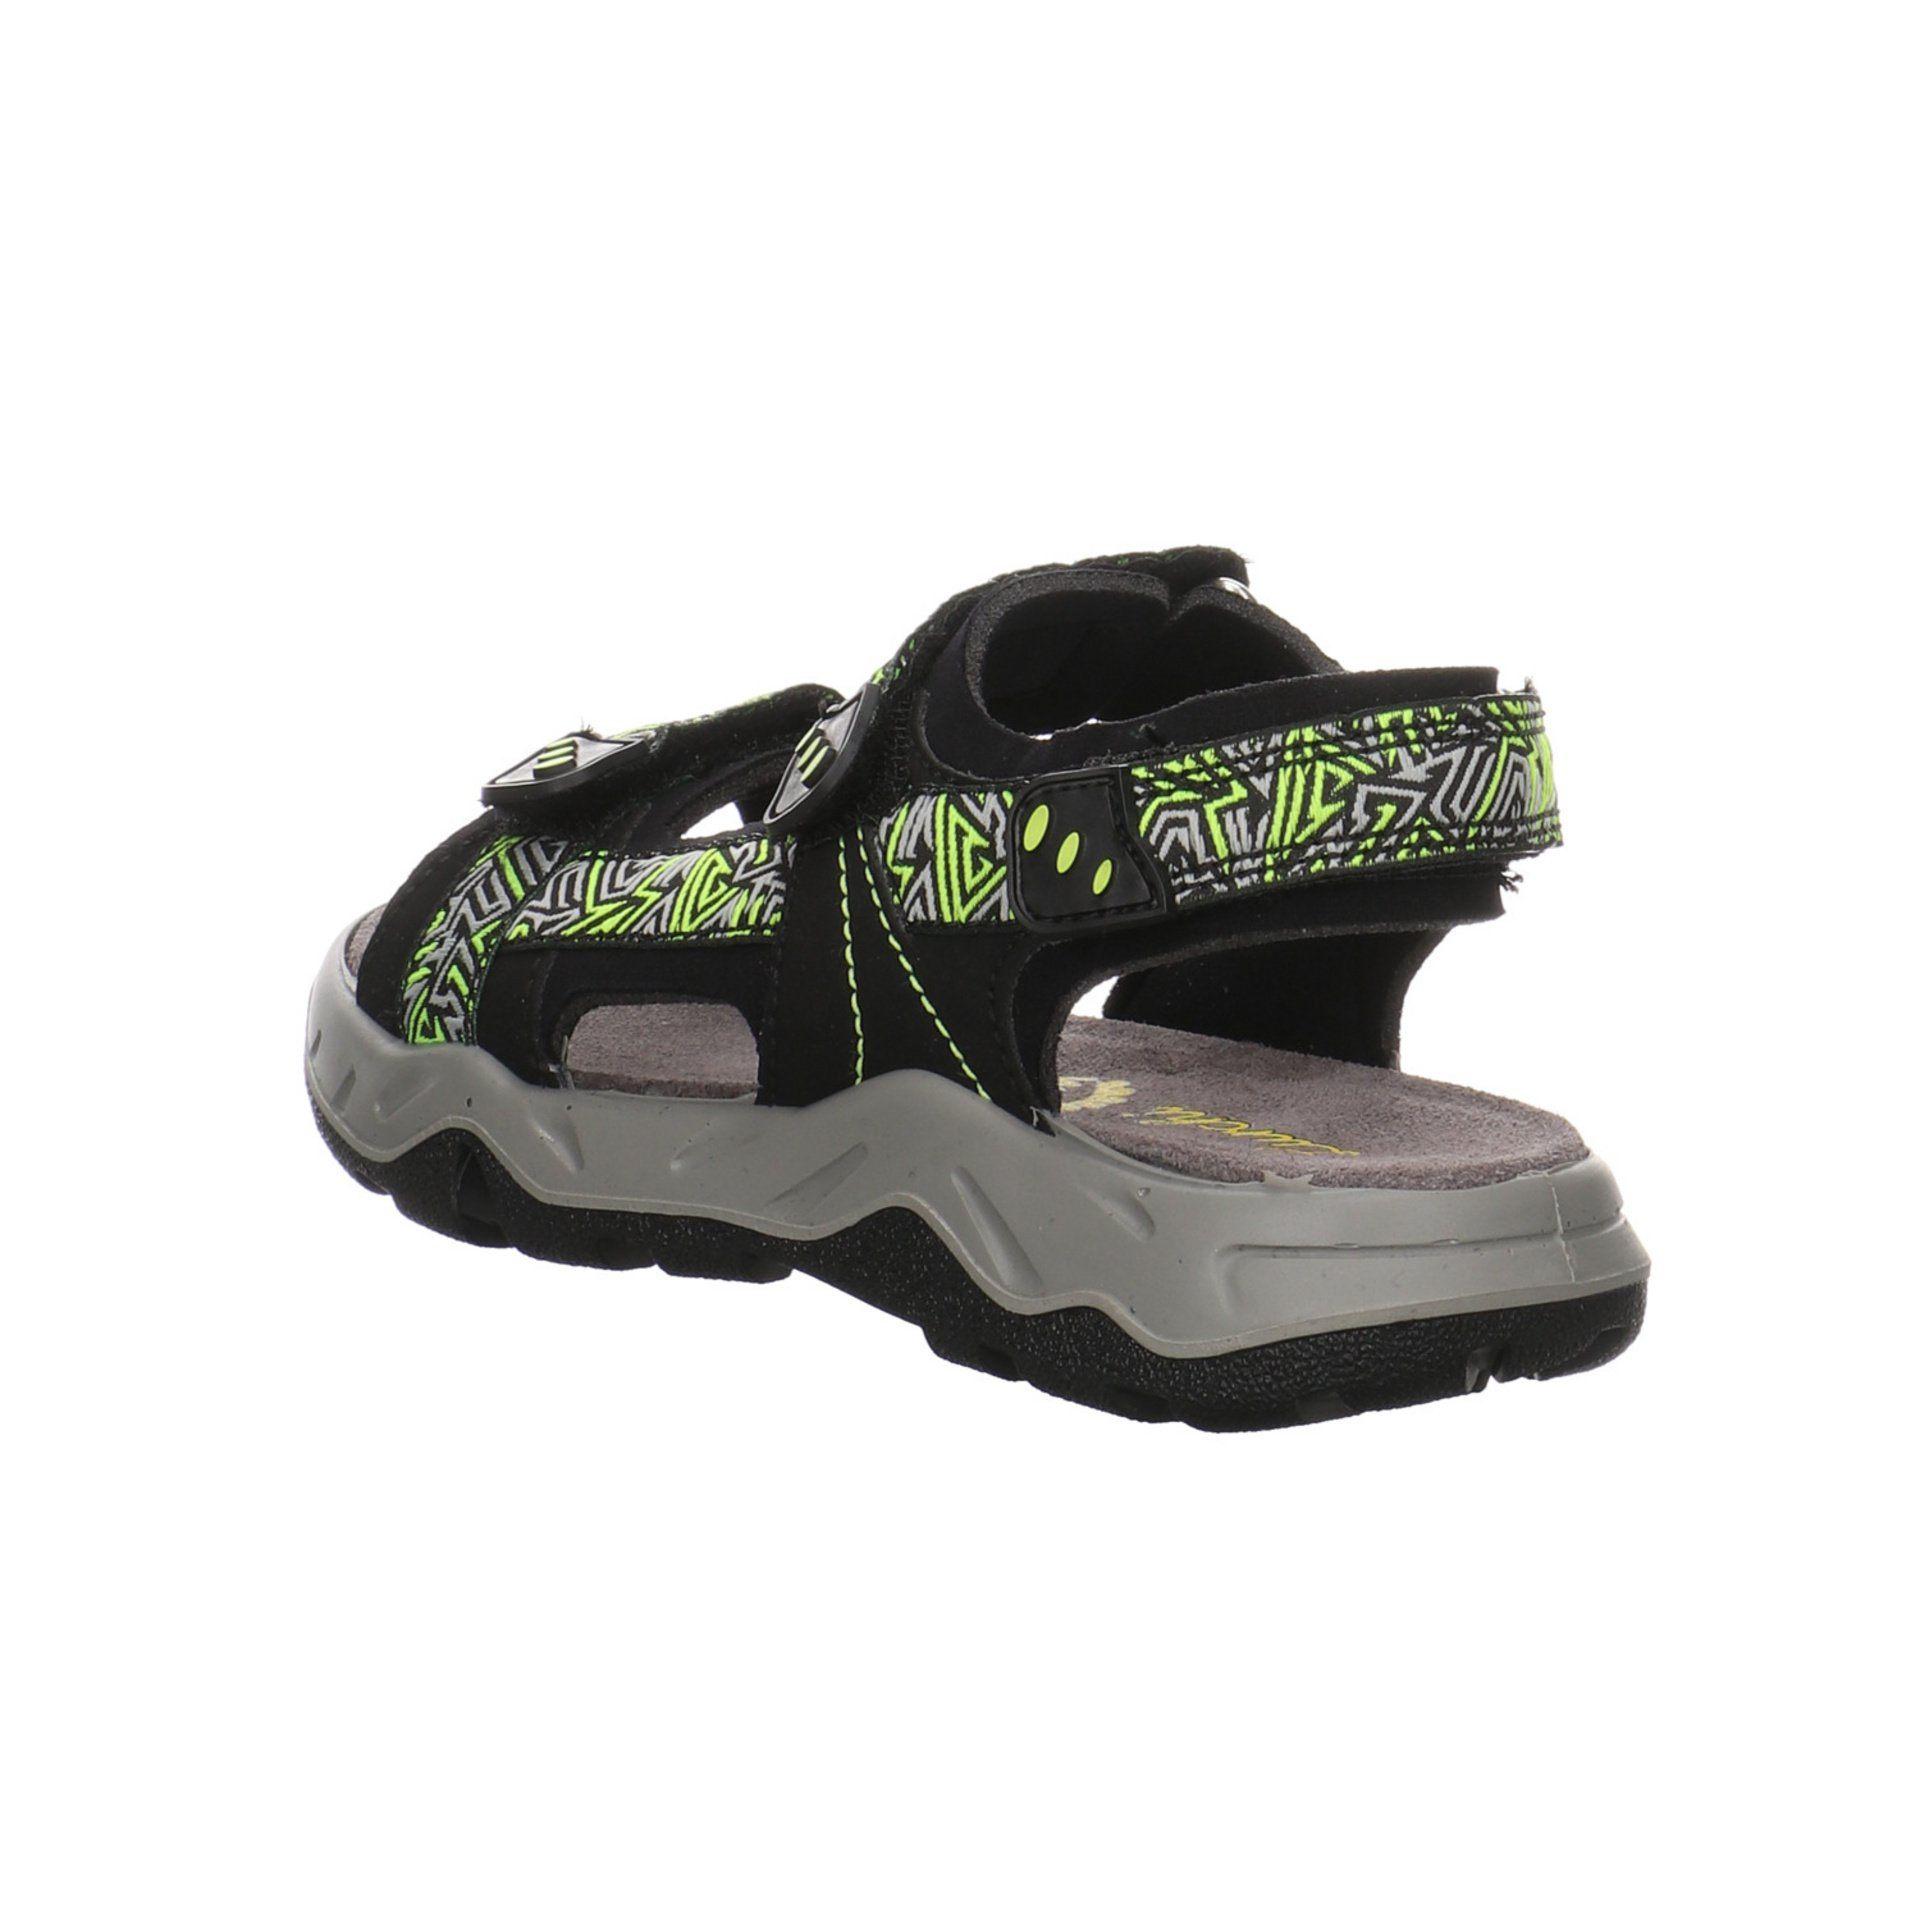 Salamander Lurchi Jungen Black Multi Synthetikkombination Sandale Kinderschuhe Sandalen Odono Schuhe Sandale